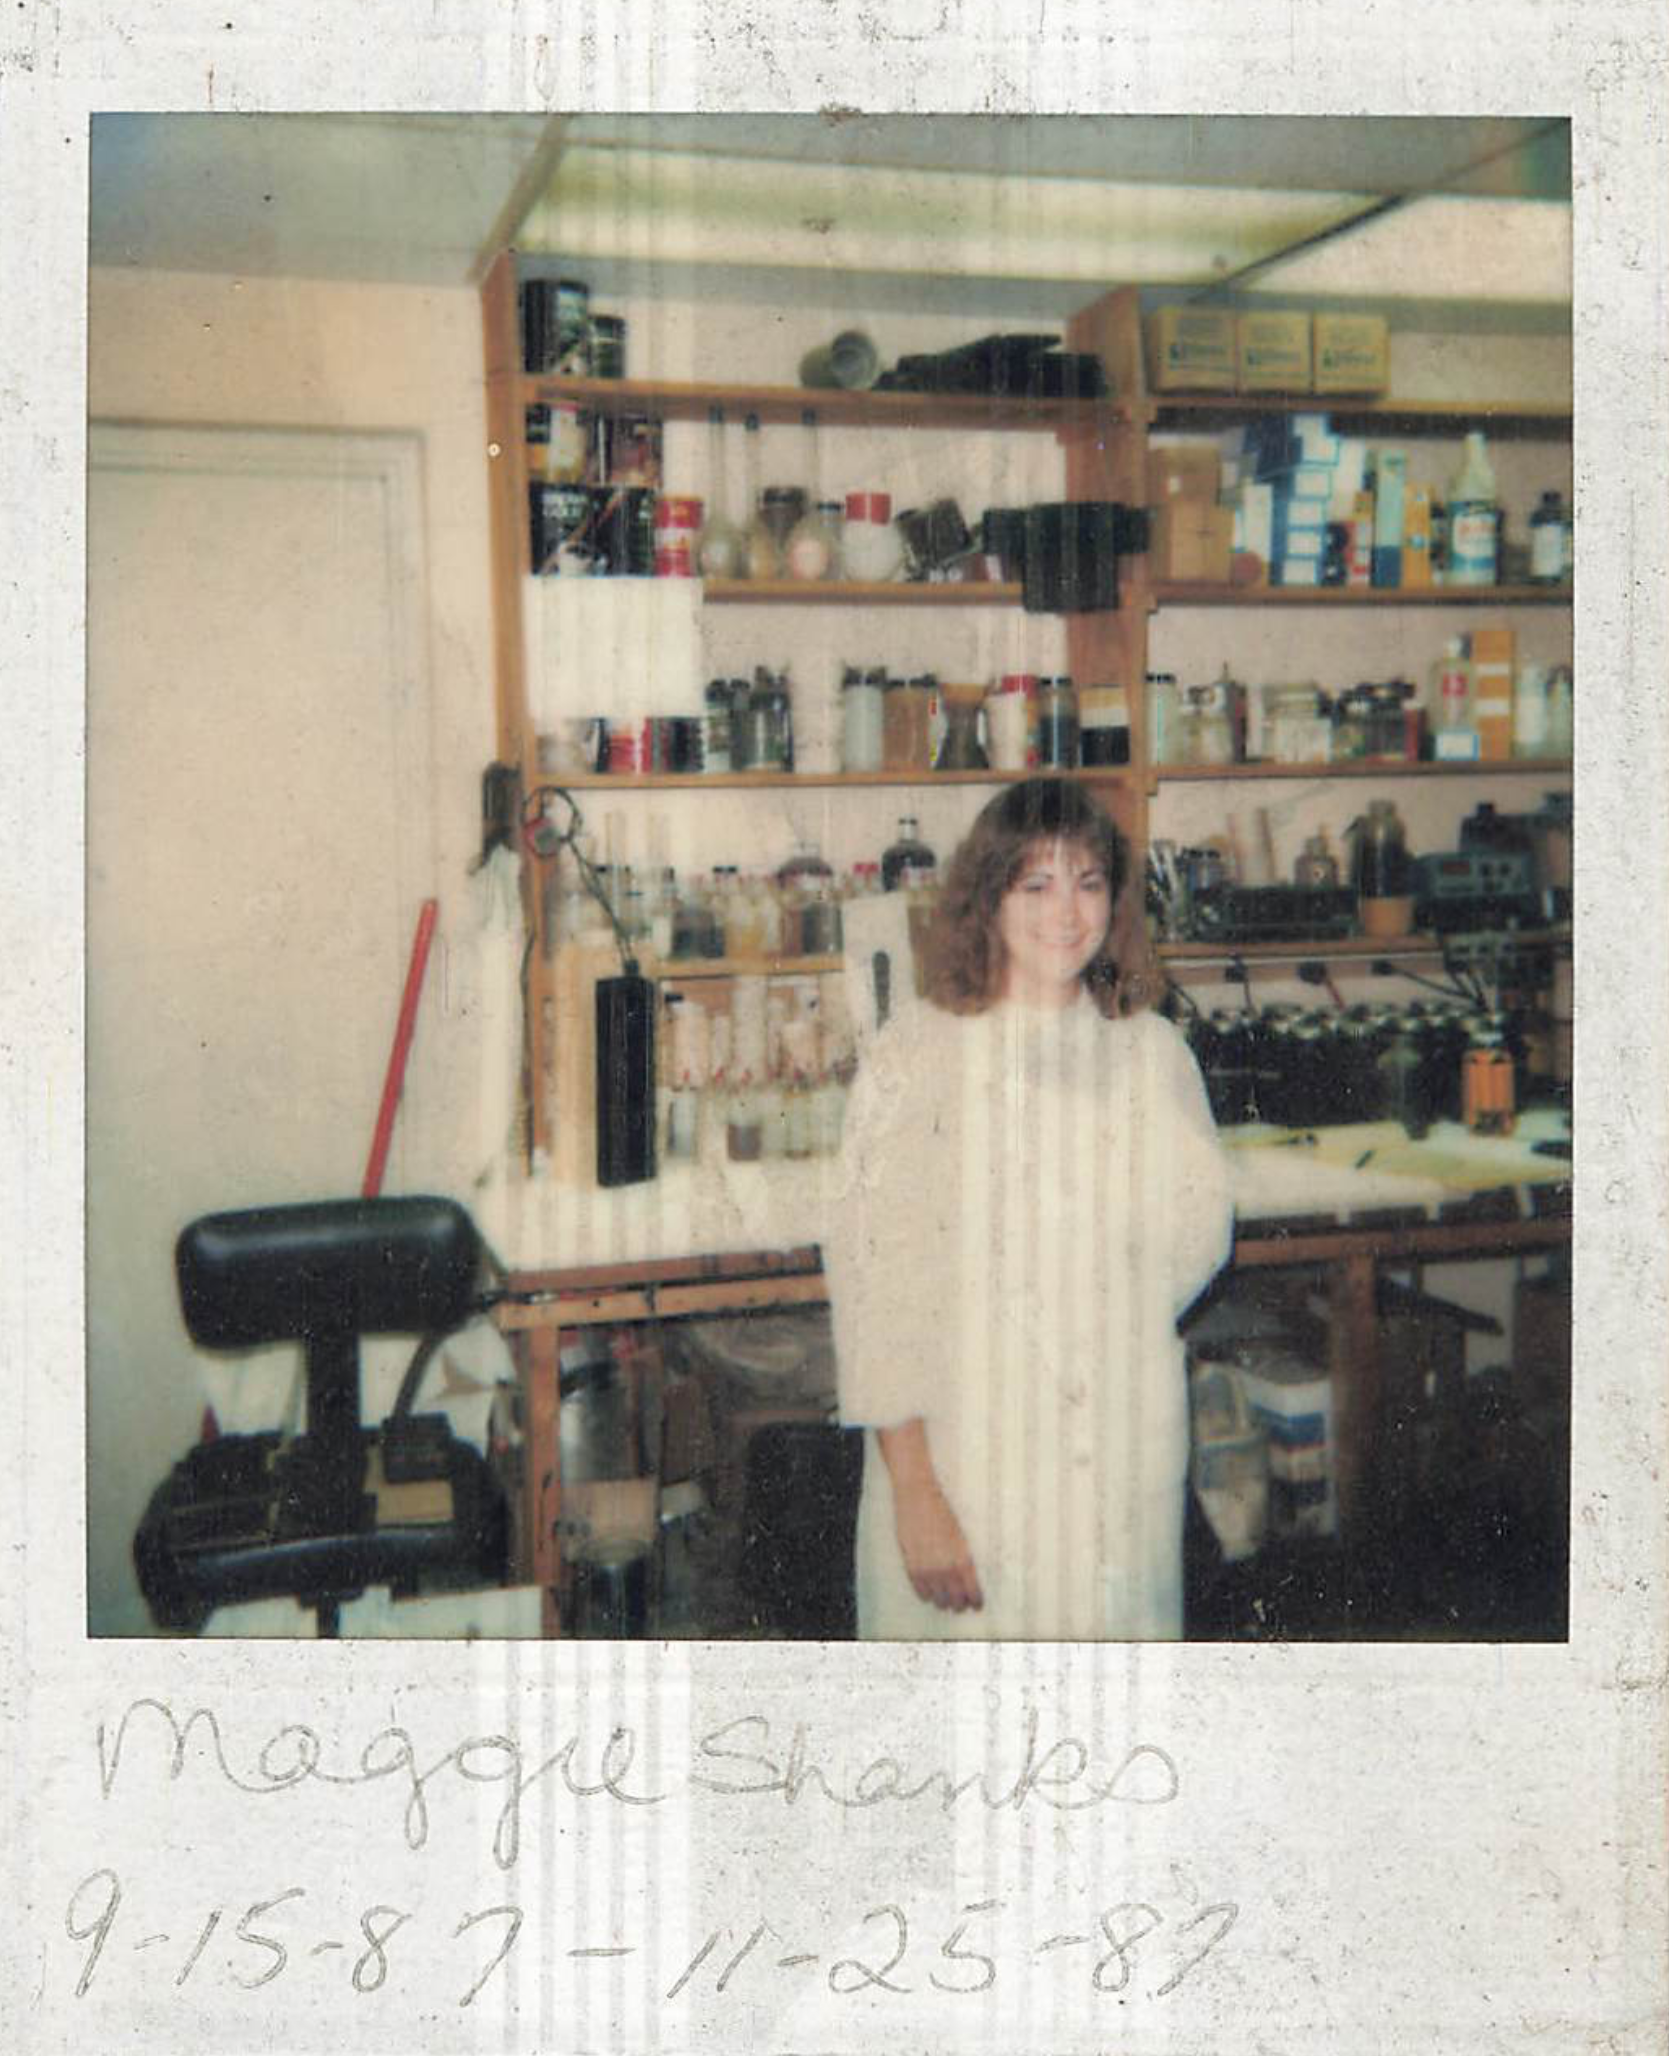 Maggie Shanks